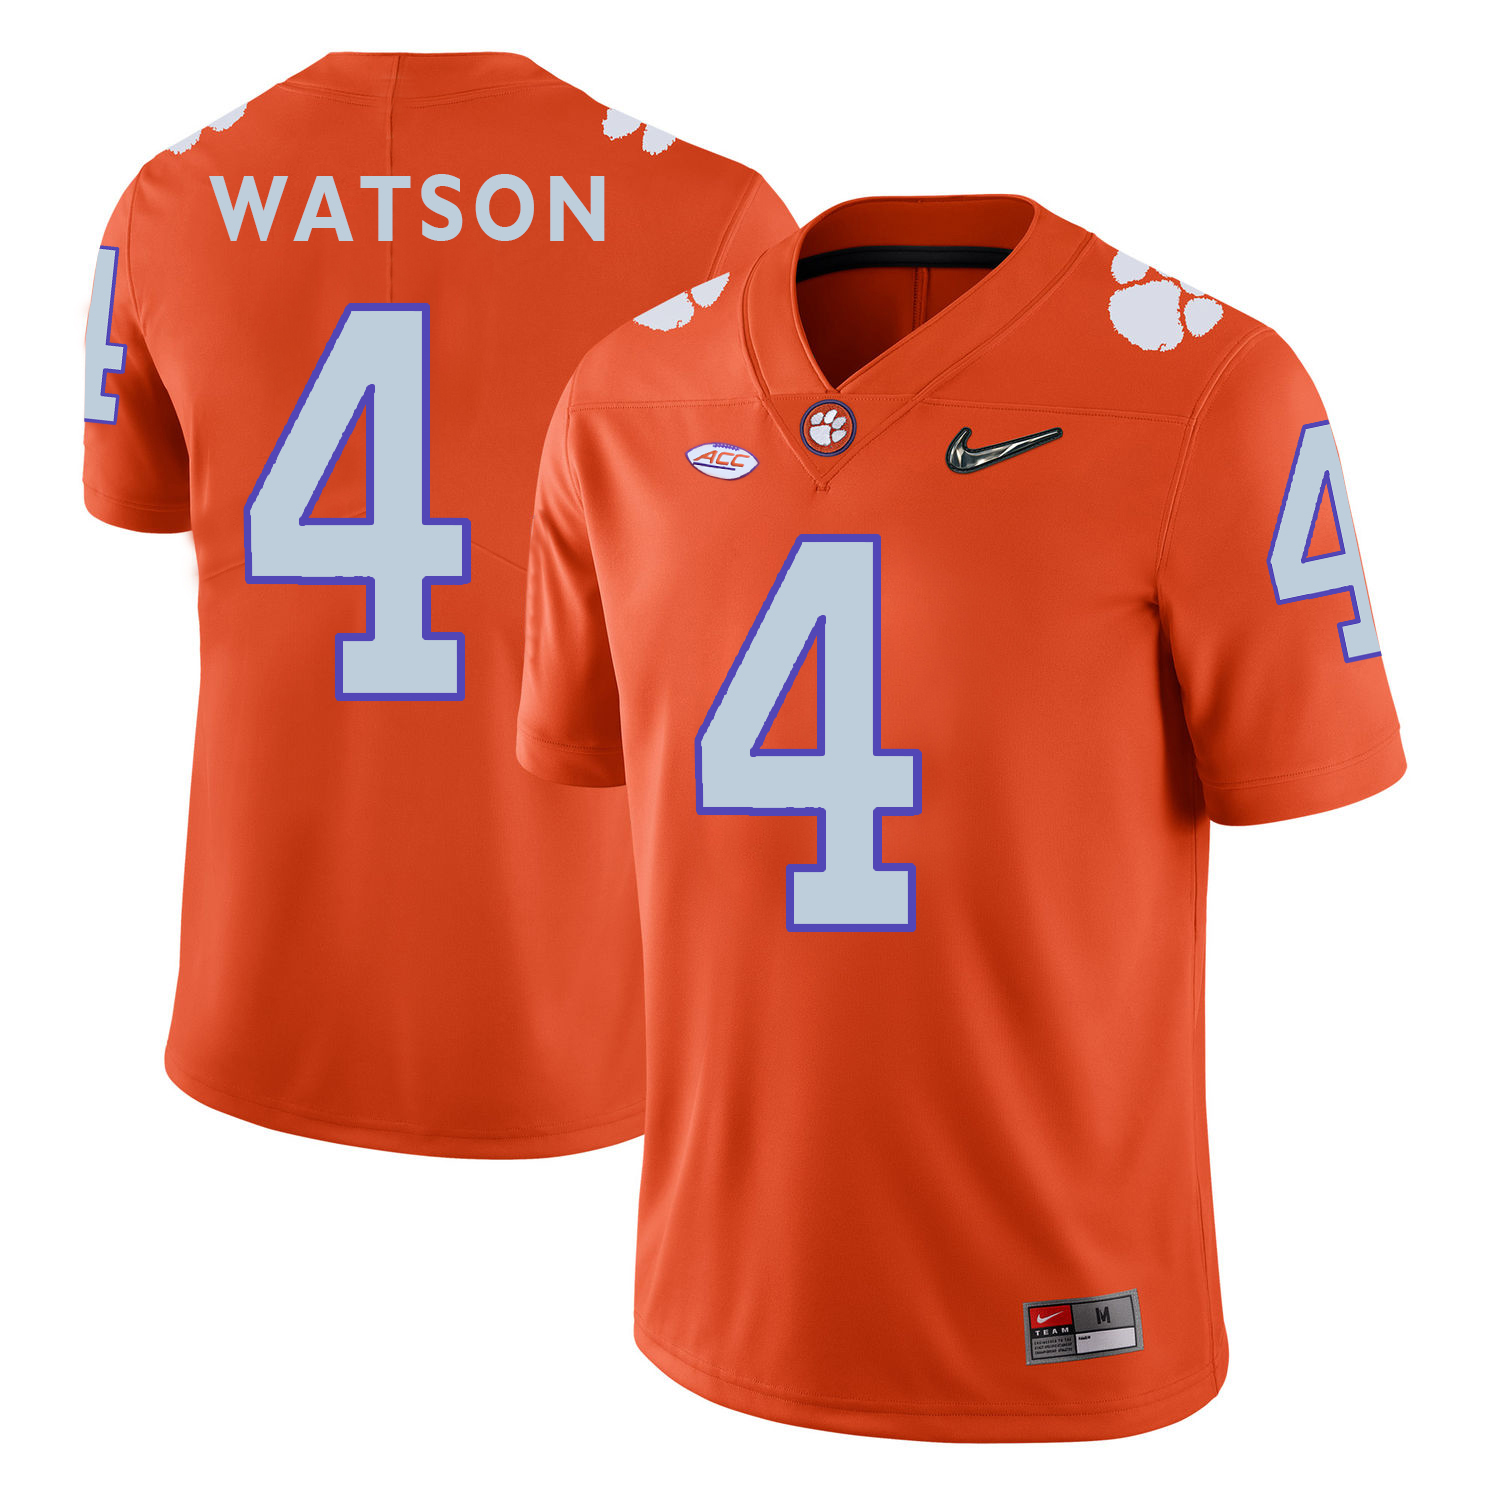 Clemson Tigers 4 DeShaun Watson Orange With Diamond Logo College Football Jersey